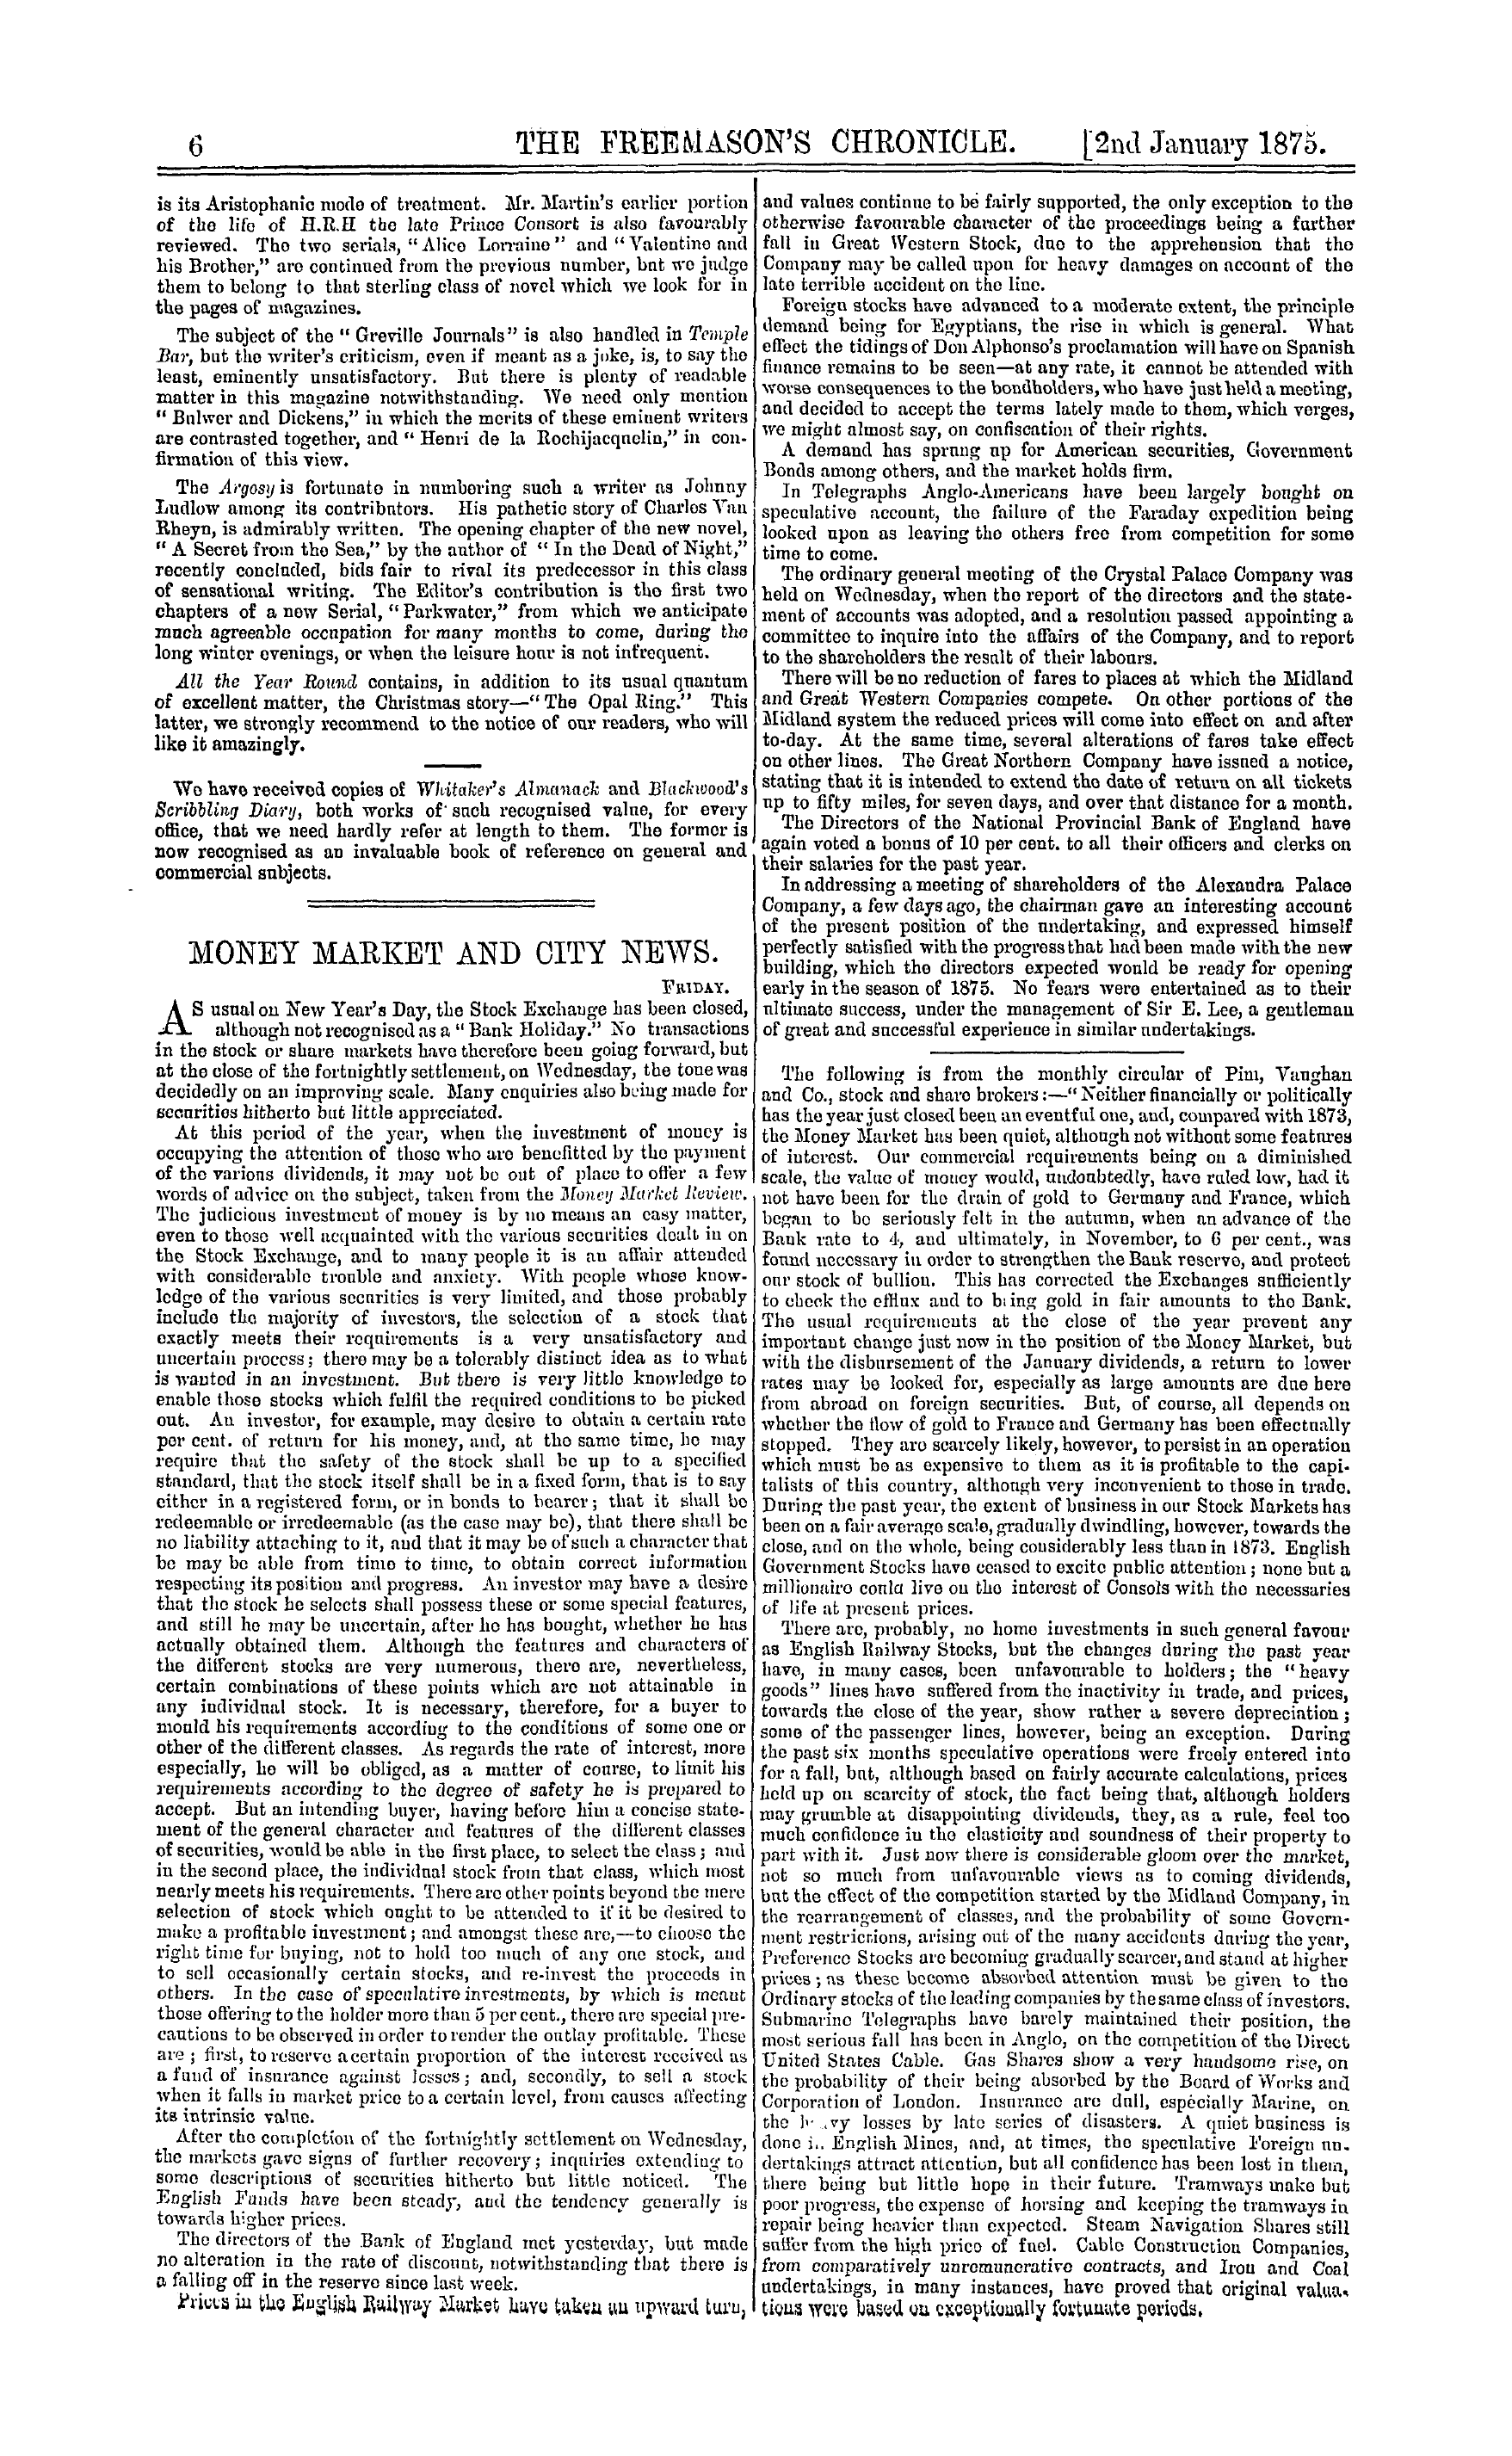 The Freemason's Chronicle: 1875-01-02 - Money Market And City News.